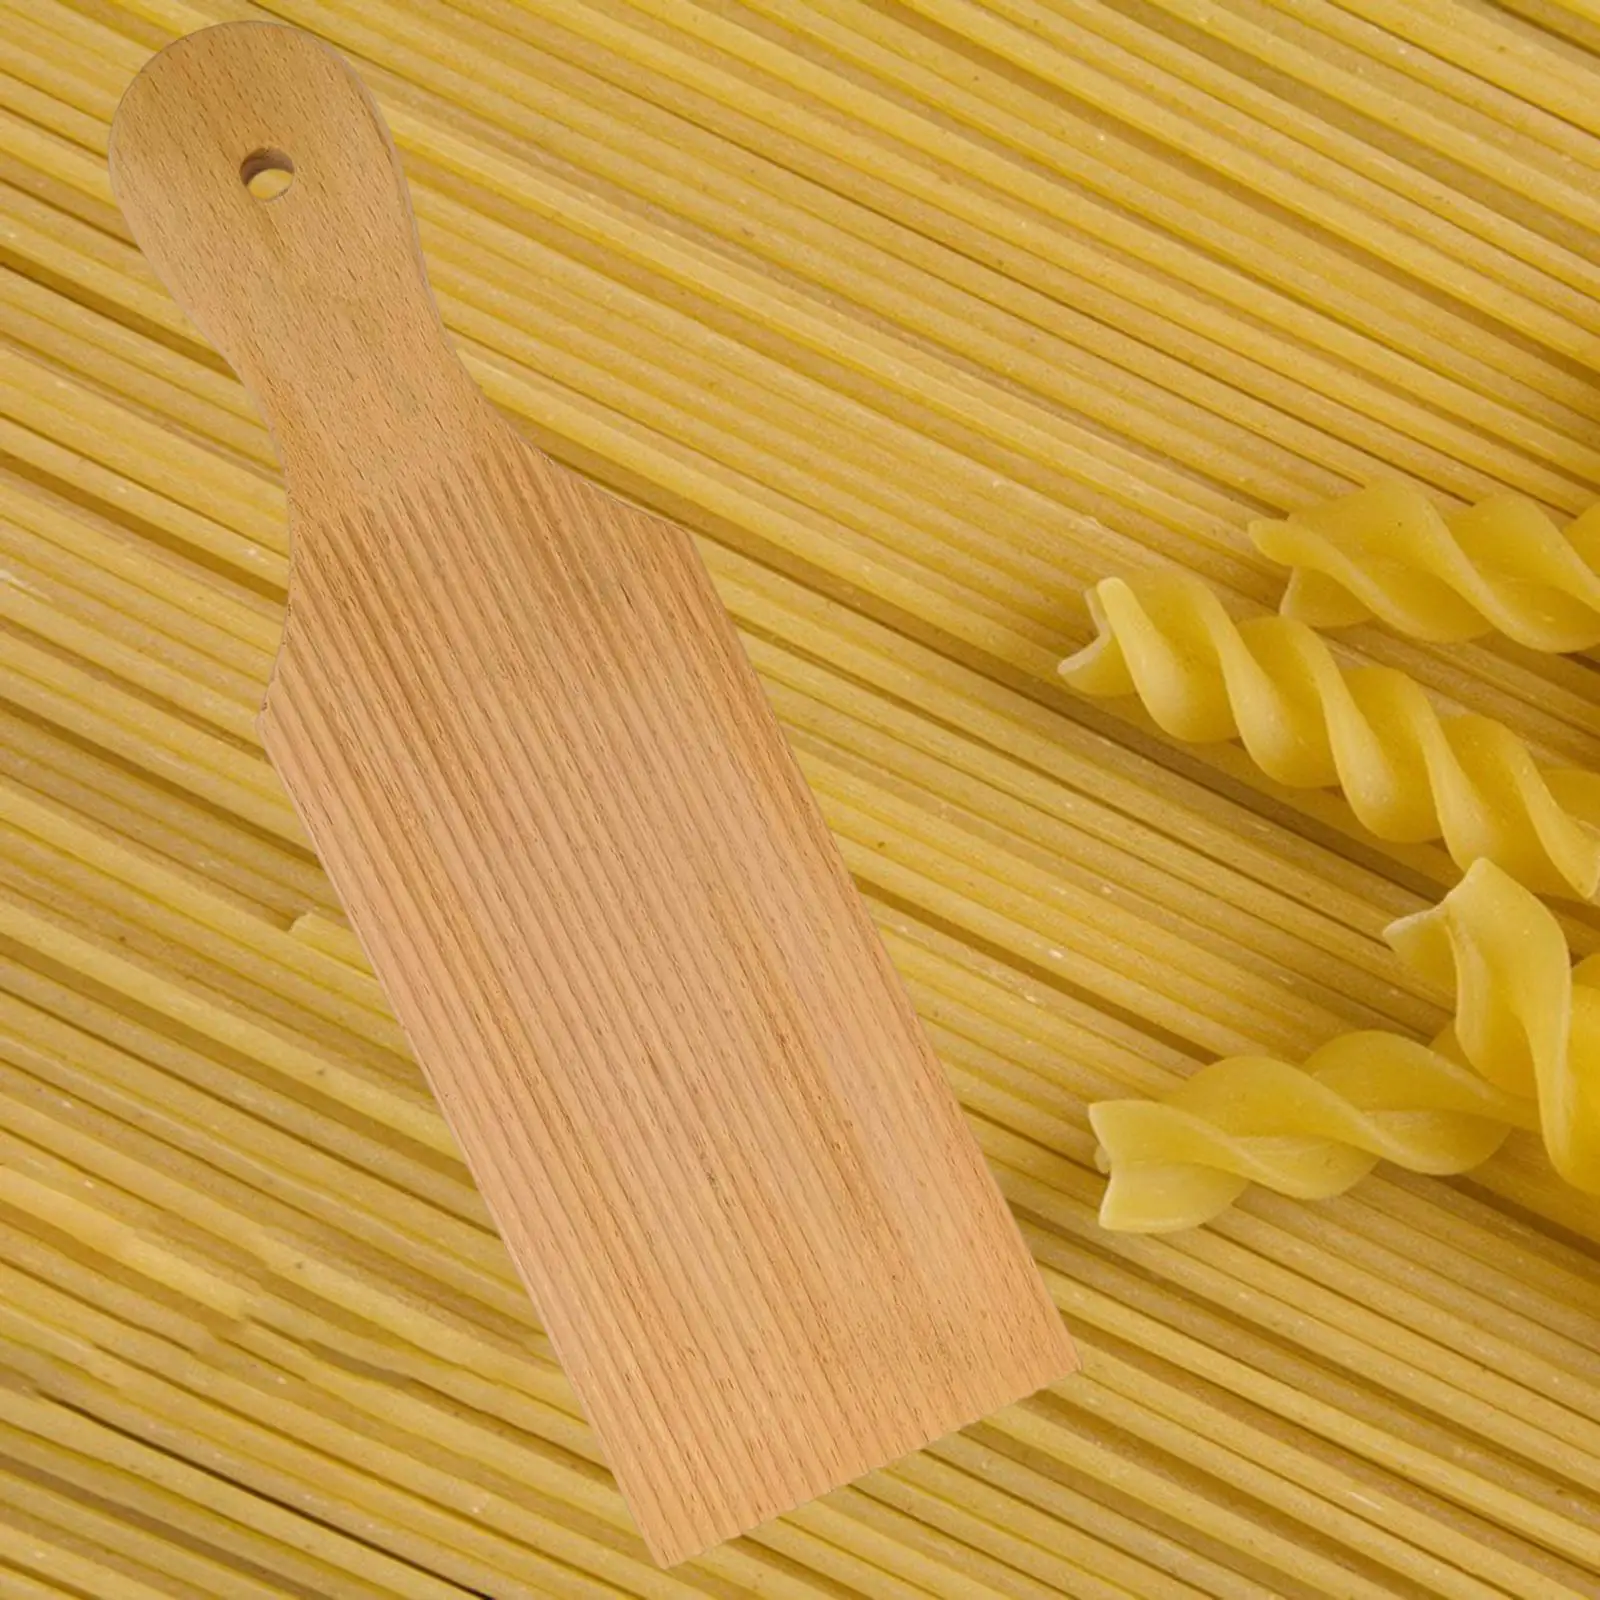 Gnocchi Board Wooden Stripe Pattern Butter Table for Rolling Kitchen Restaurant